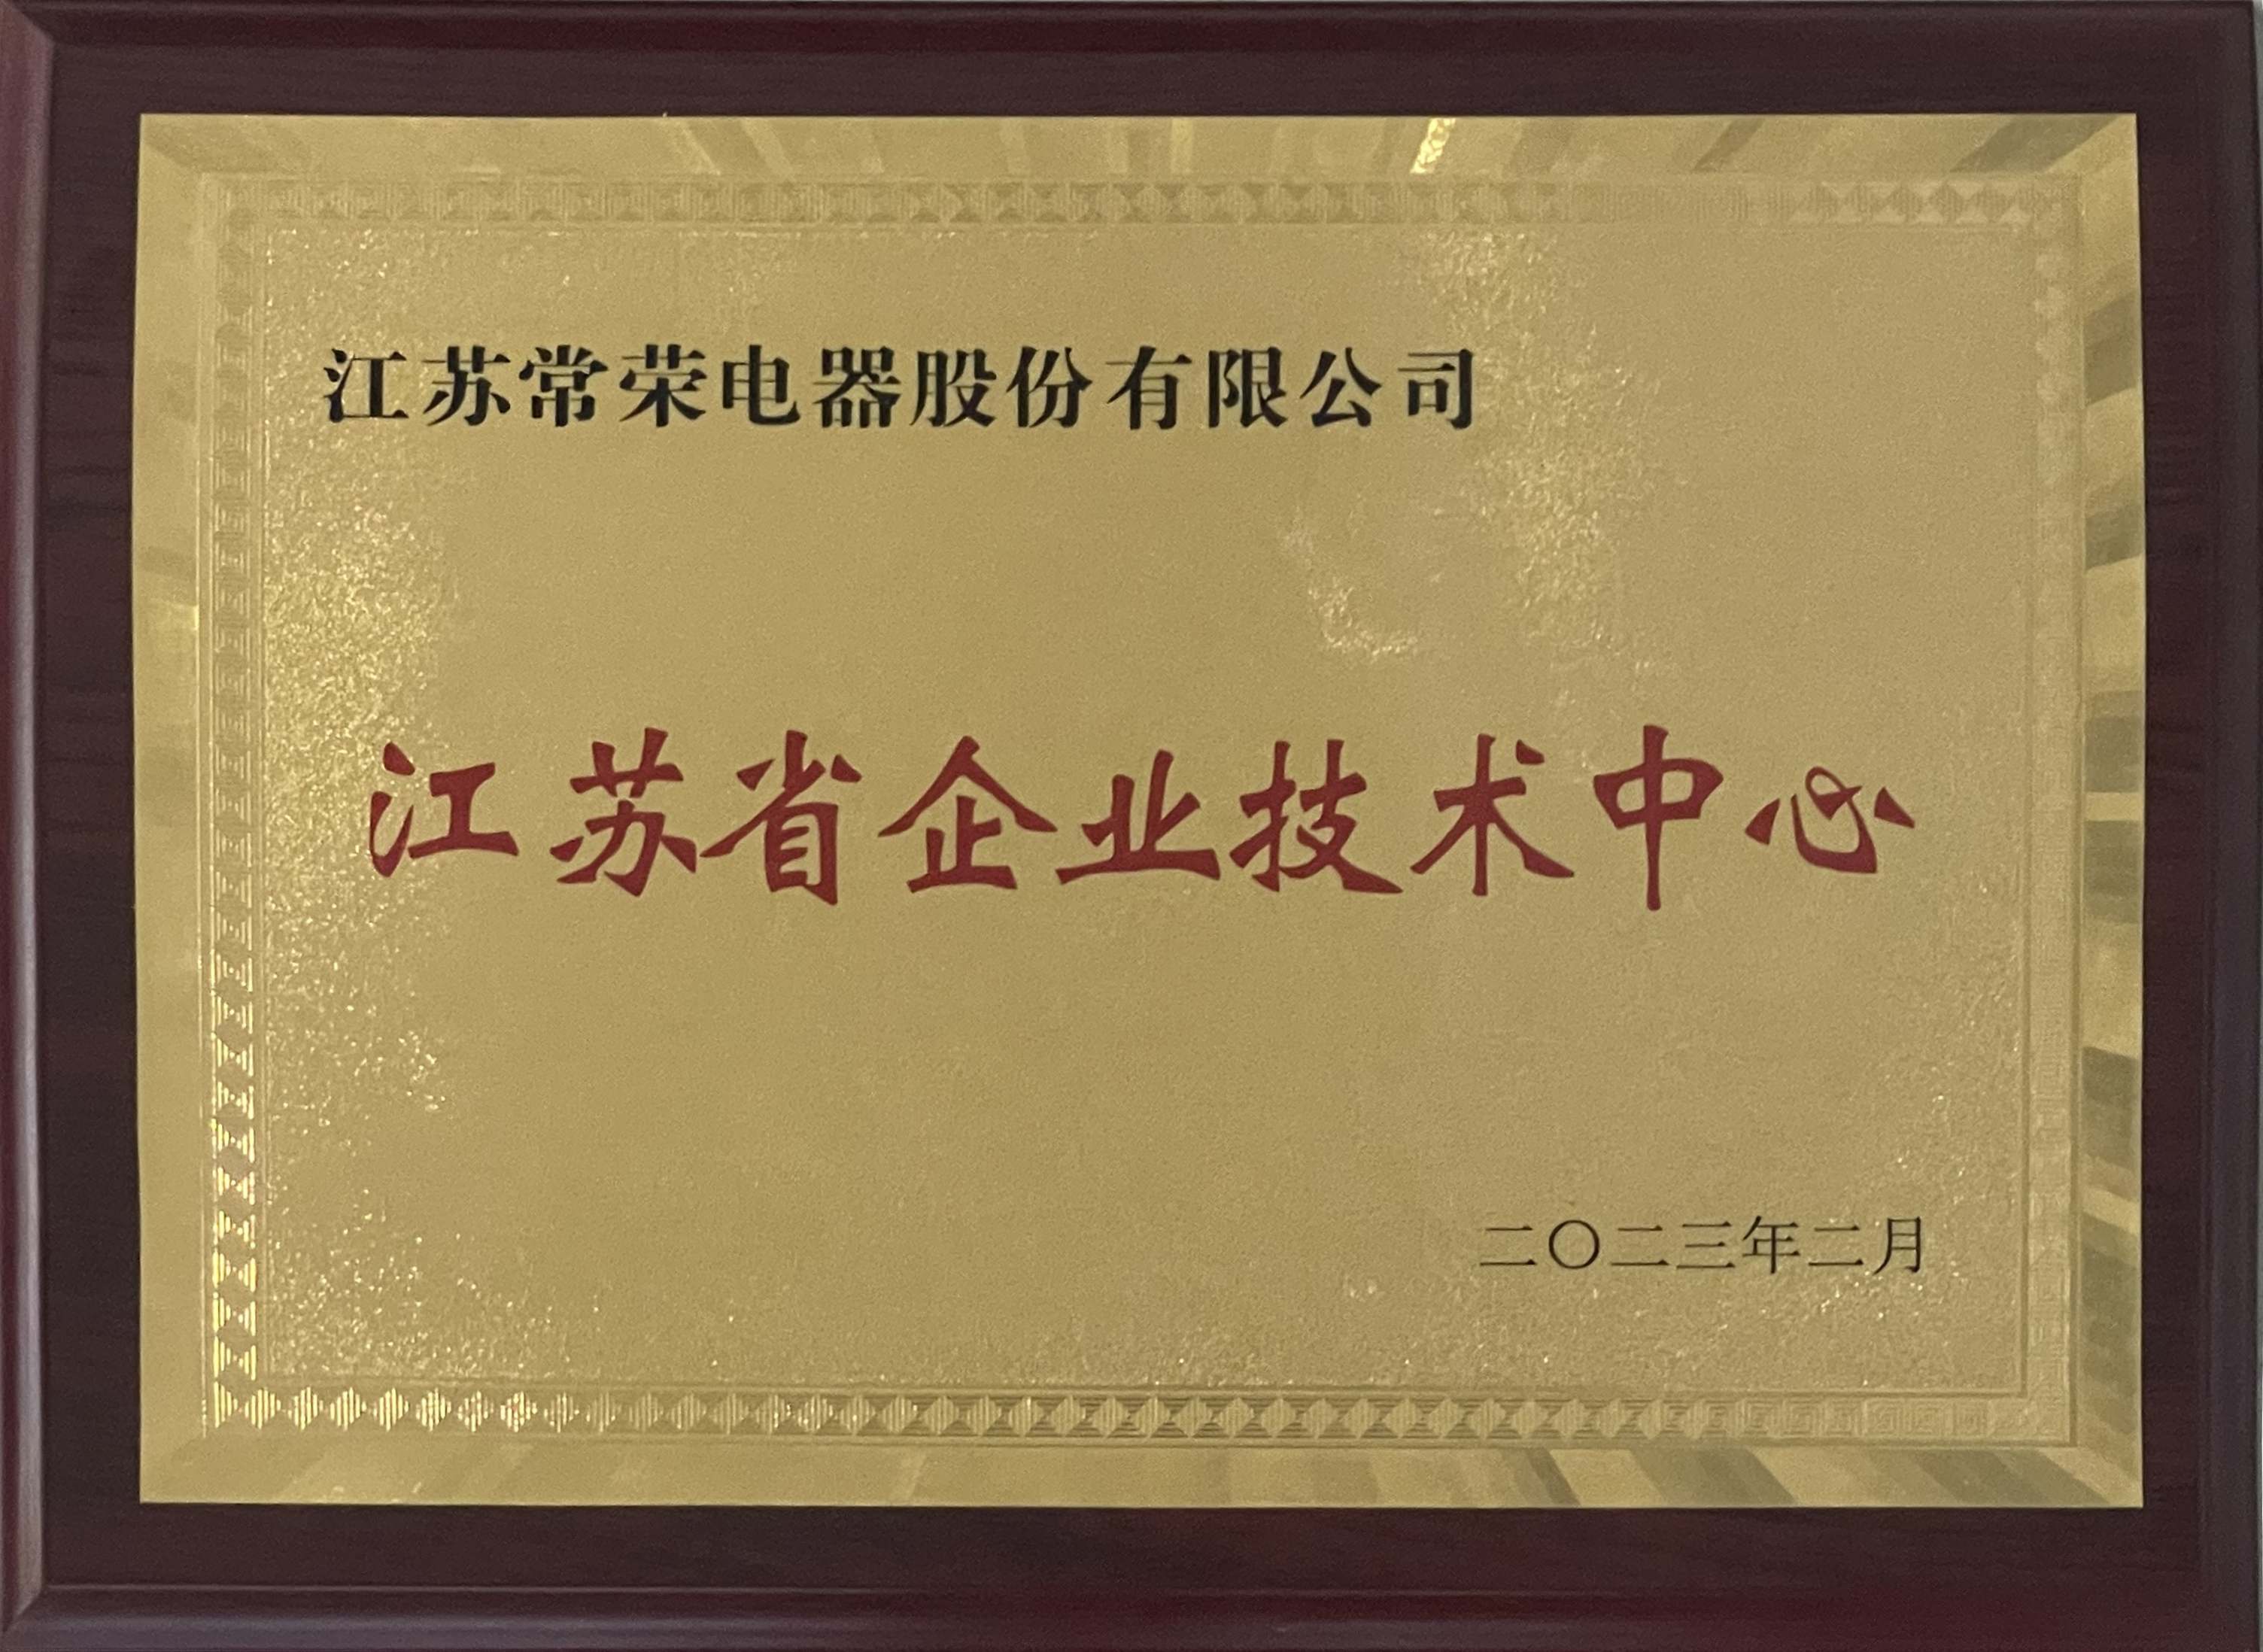 Medal: Jiangsu Provincial Enterprise Center